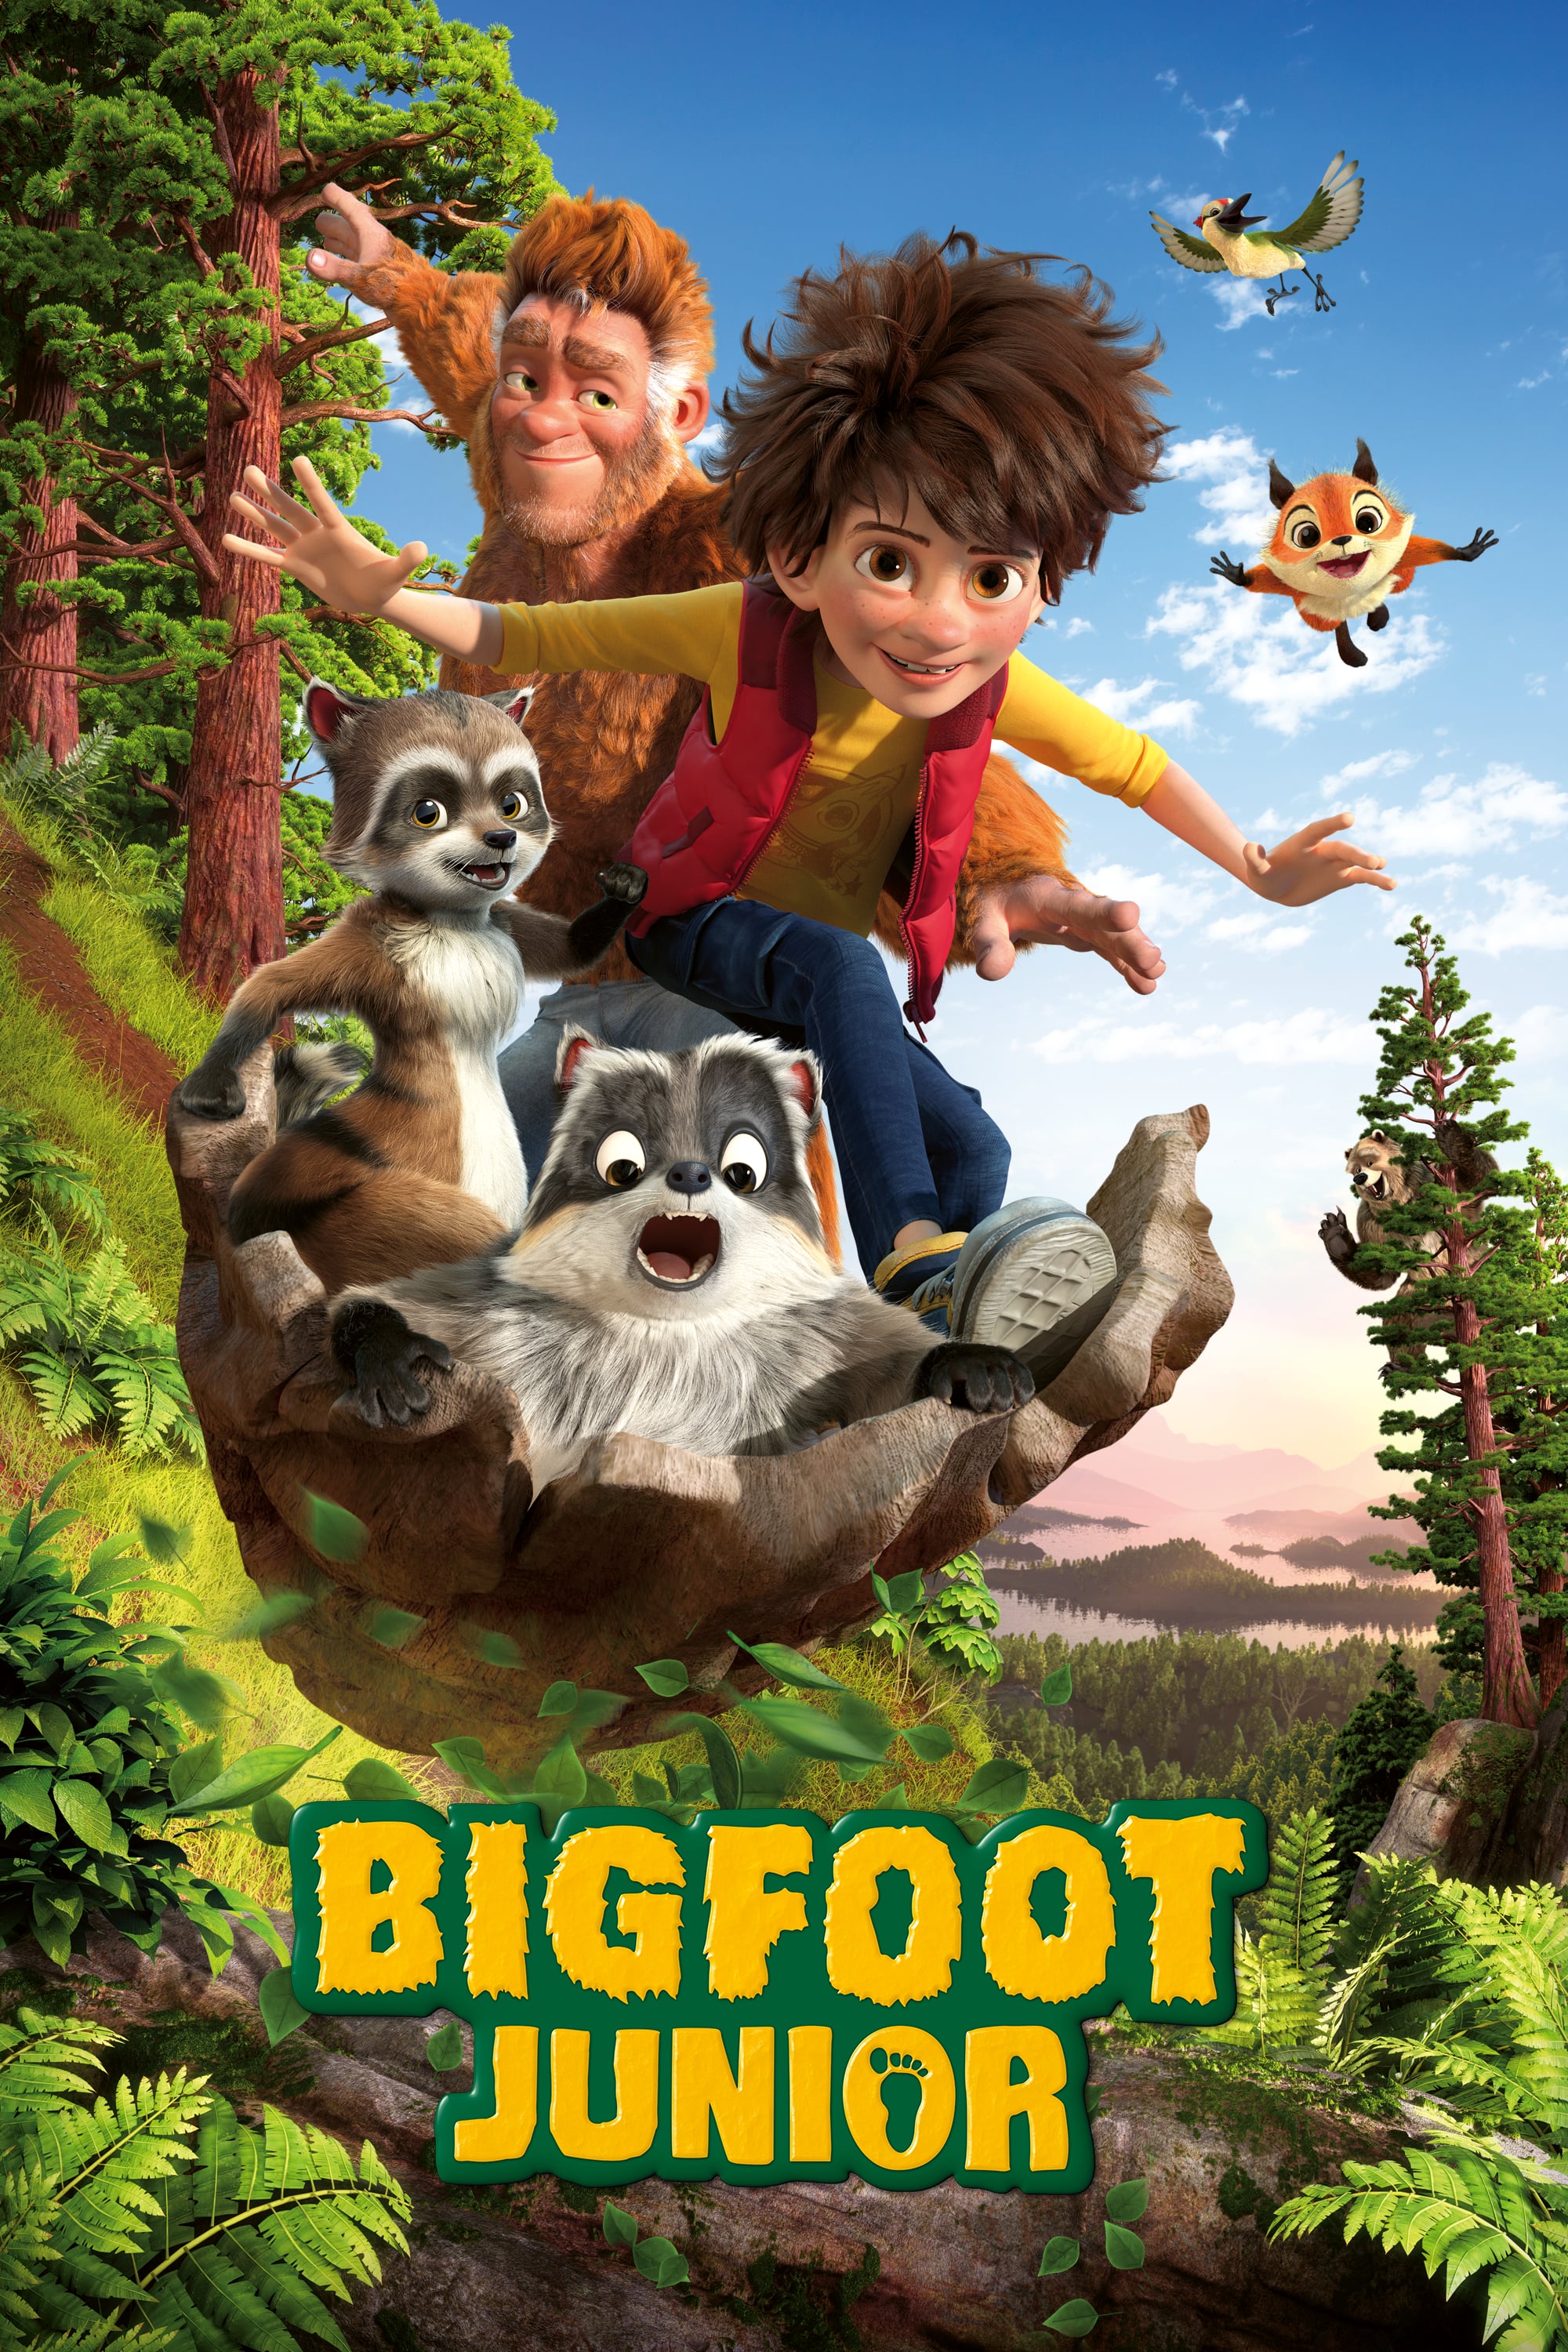 Plakat von "Bigfoot Junior"